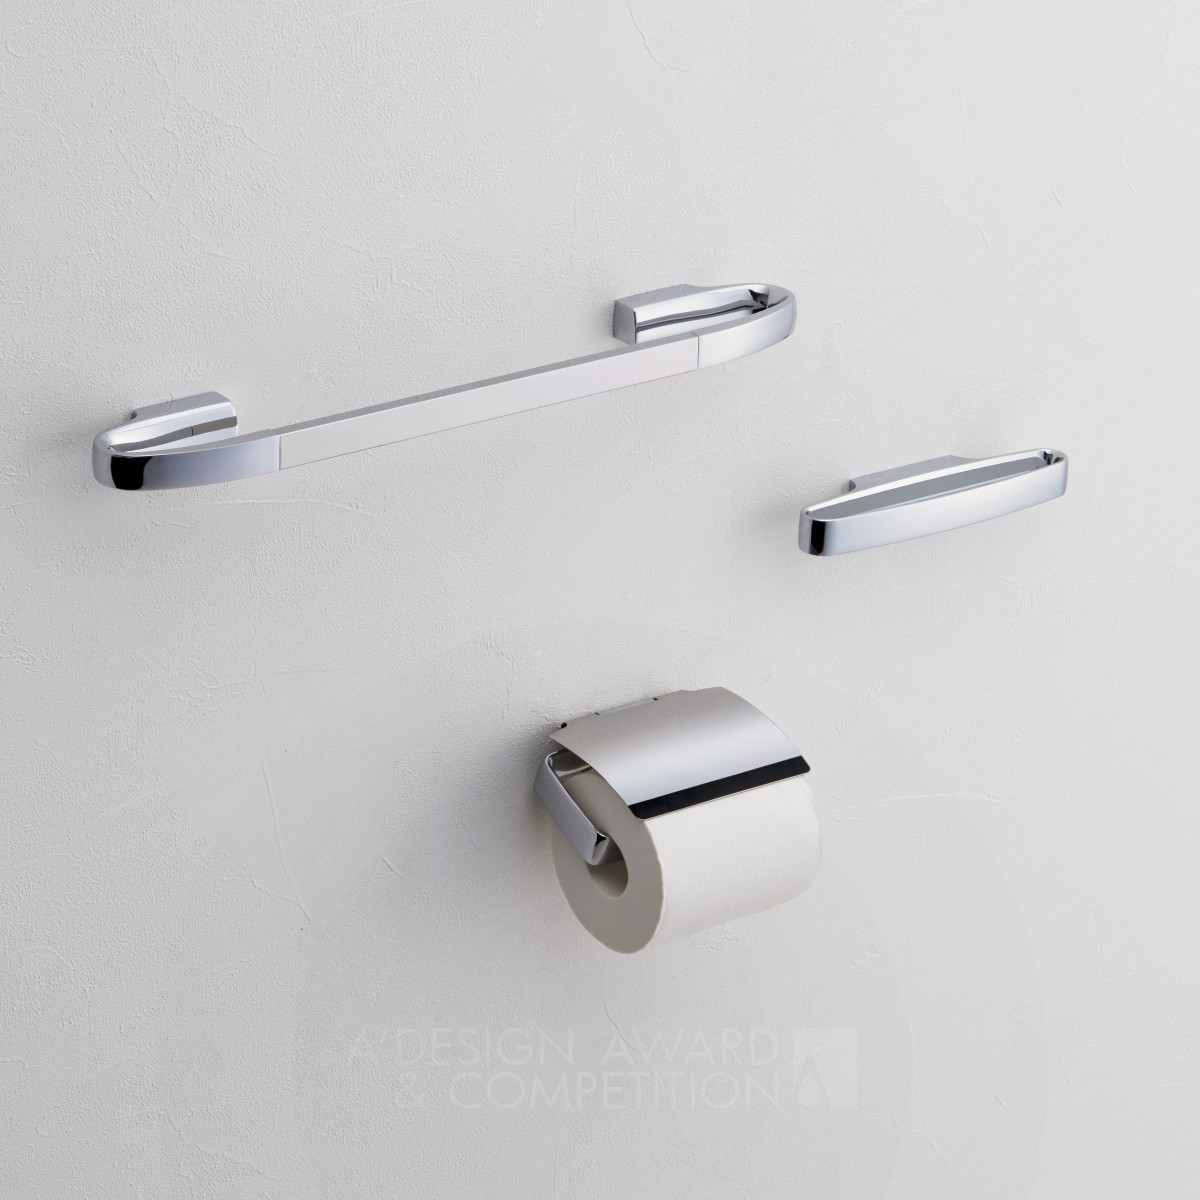 R2300 Series Space saving bathroom accessories